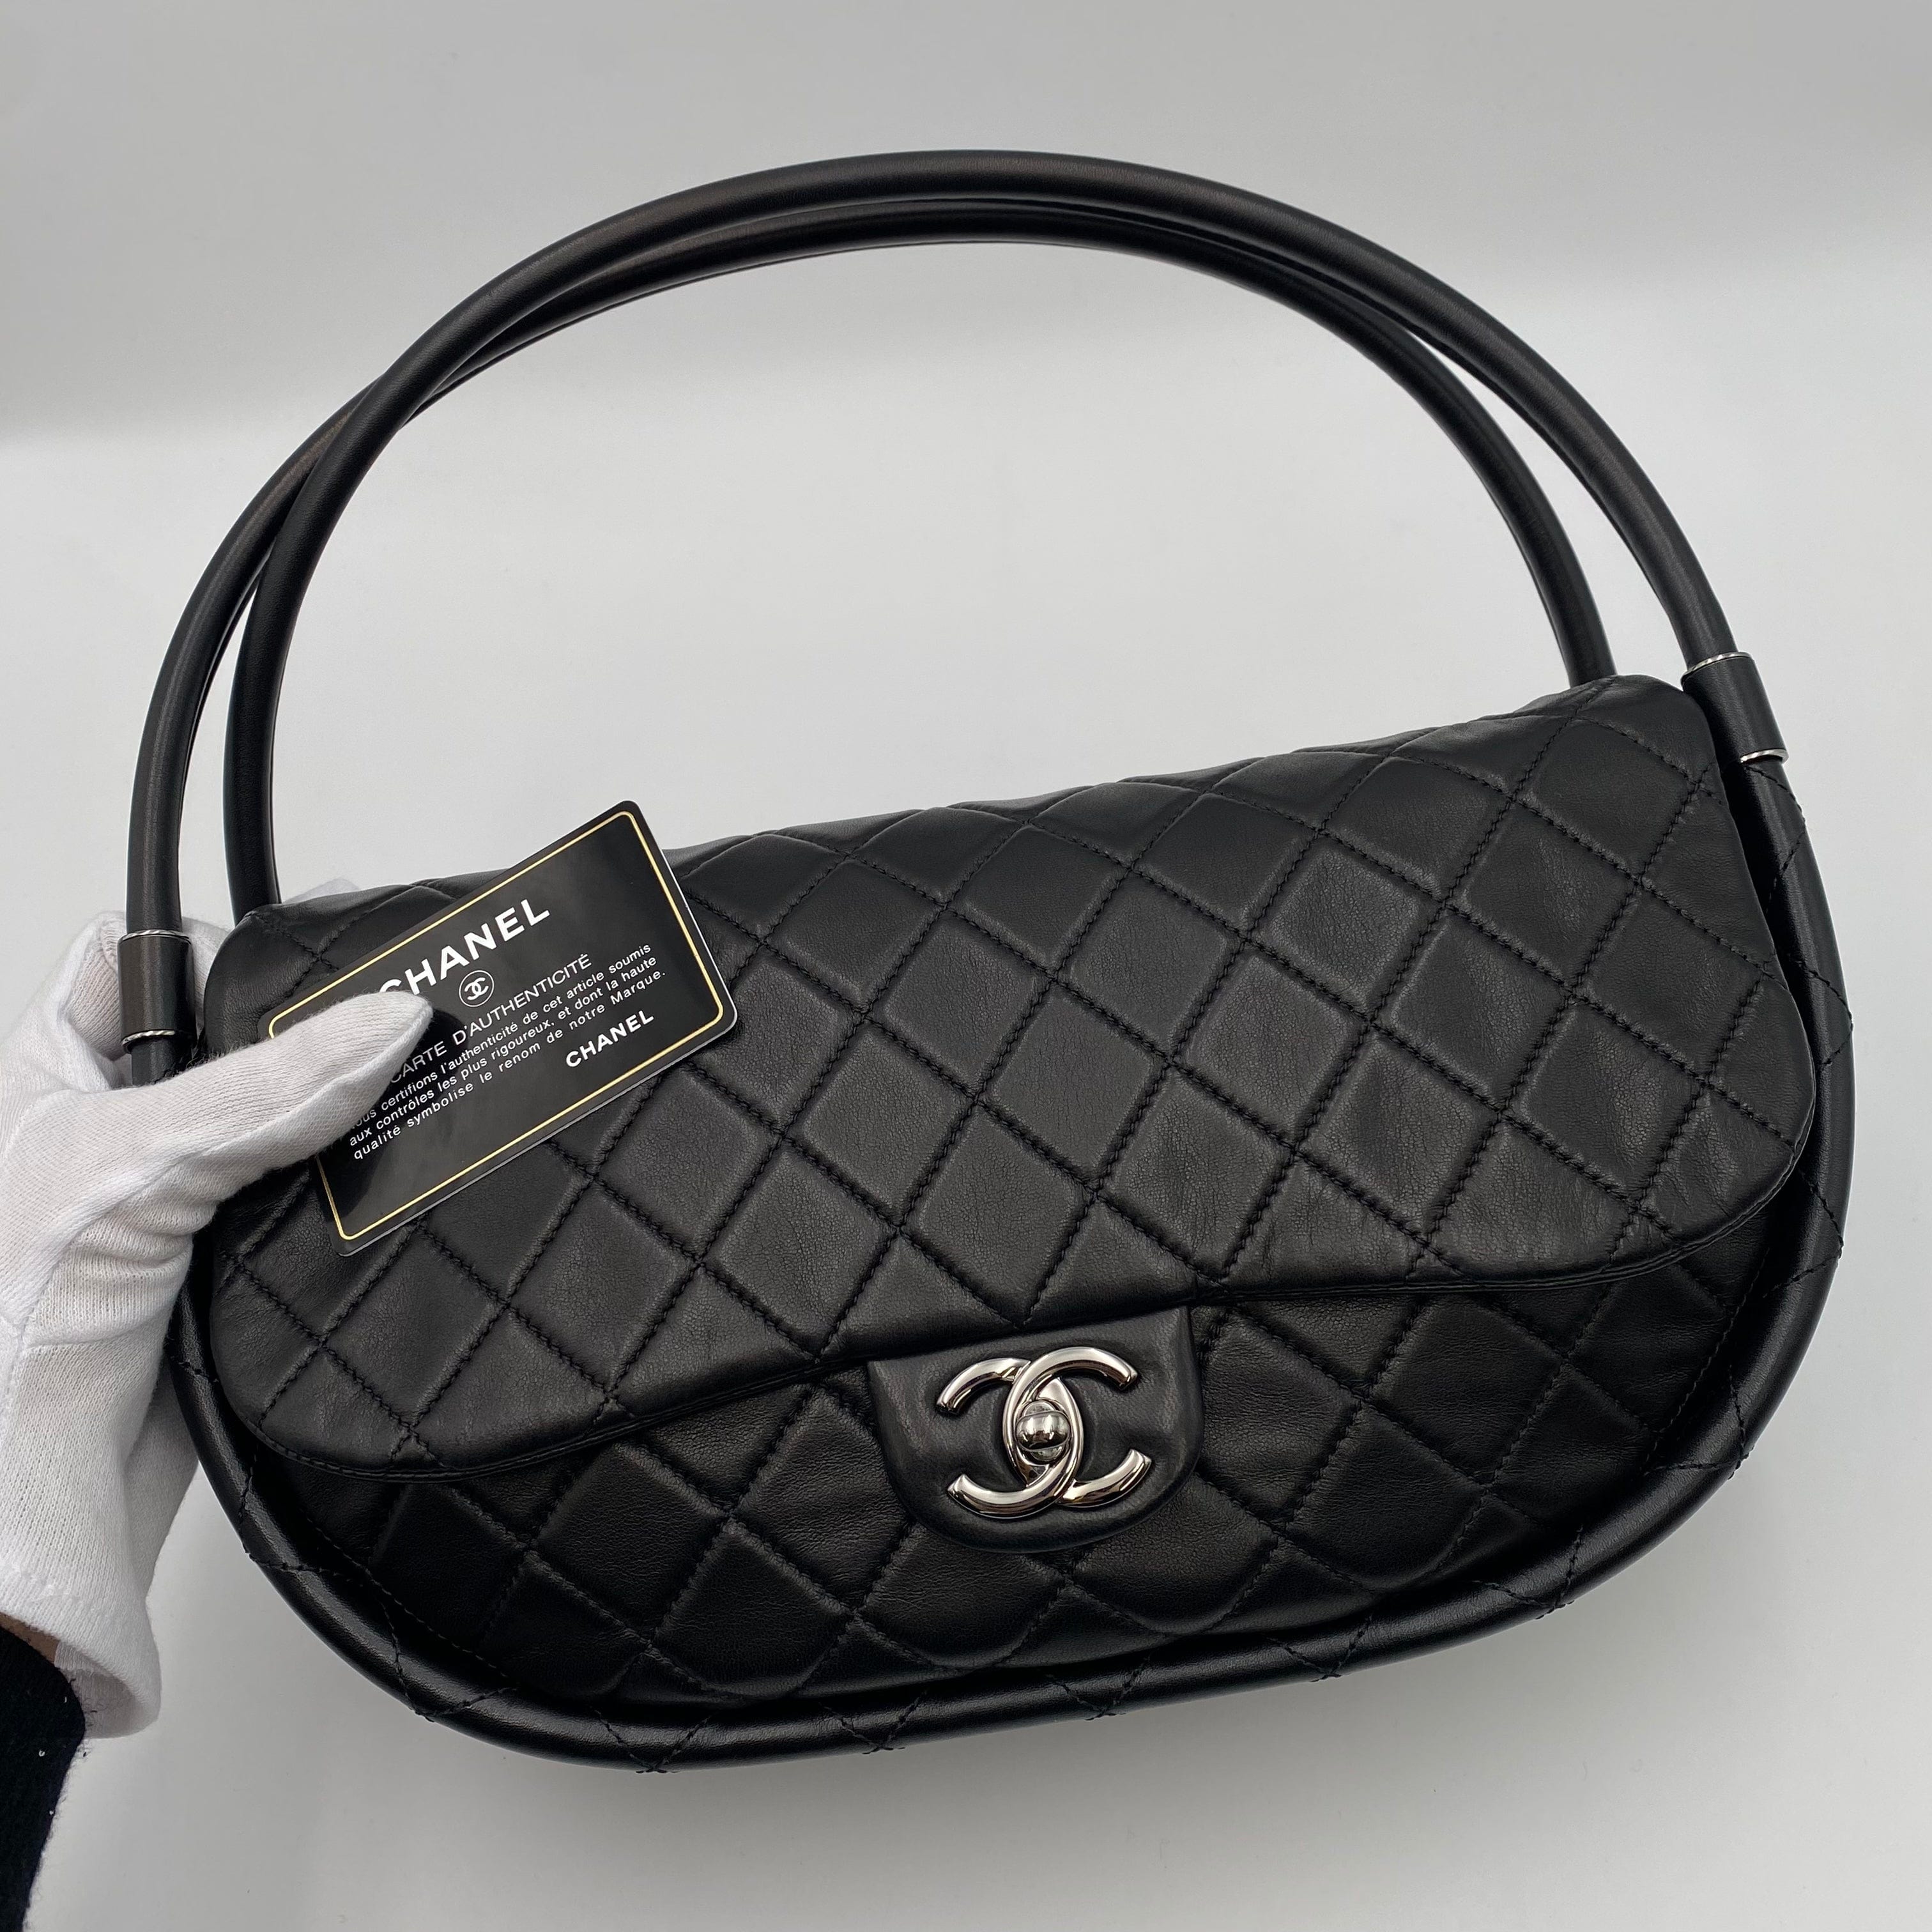 Chanel CHANEL HULA HOOP CROSS HAND BAG BLACK LAMB SKIN 90219238